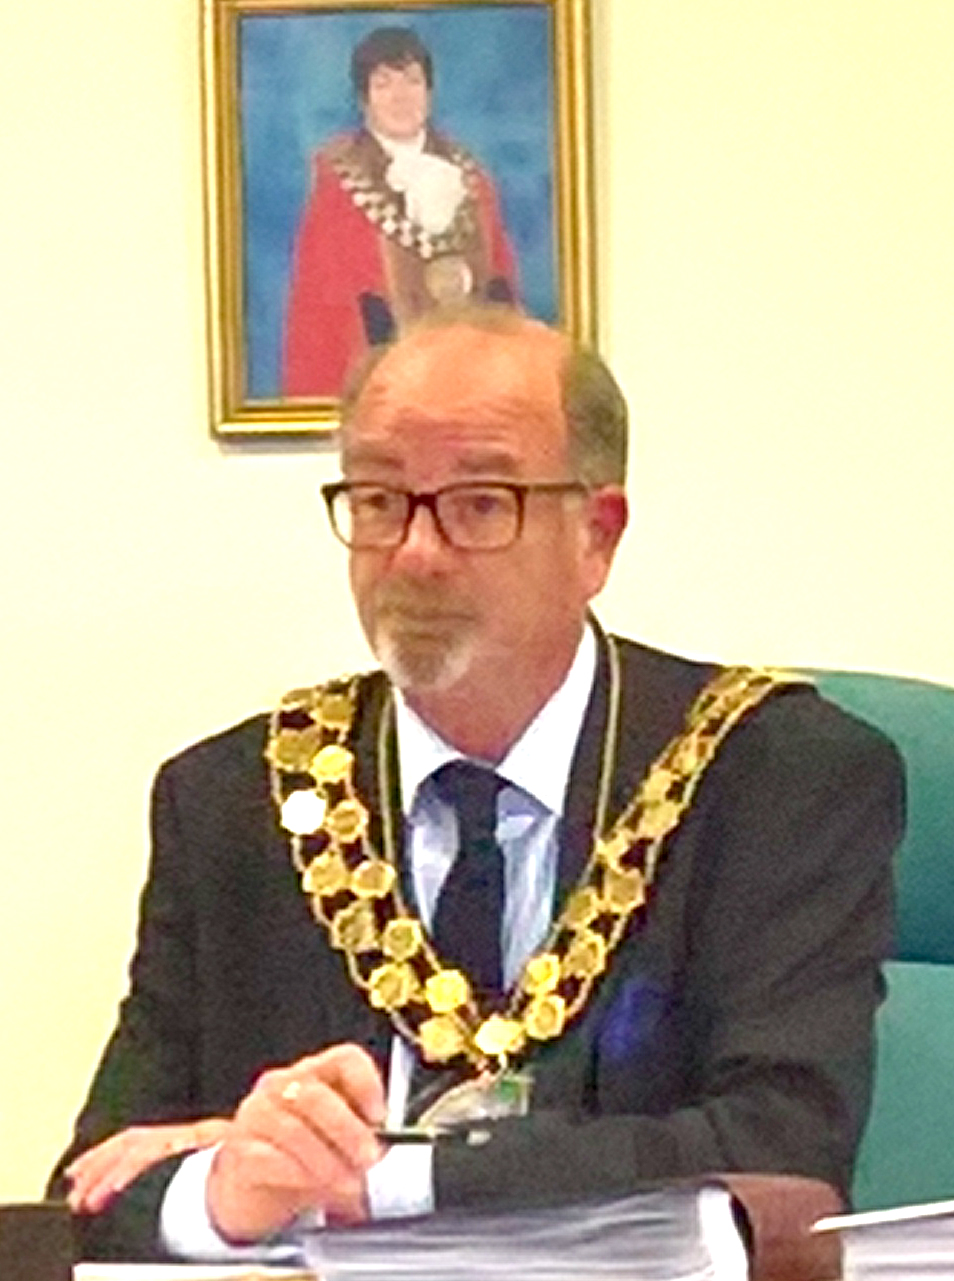 Great Aycliffe’s New Mayor 2018/19